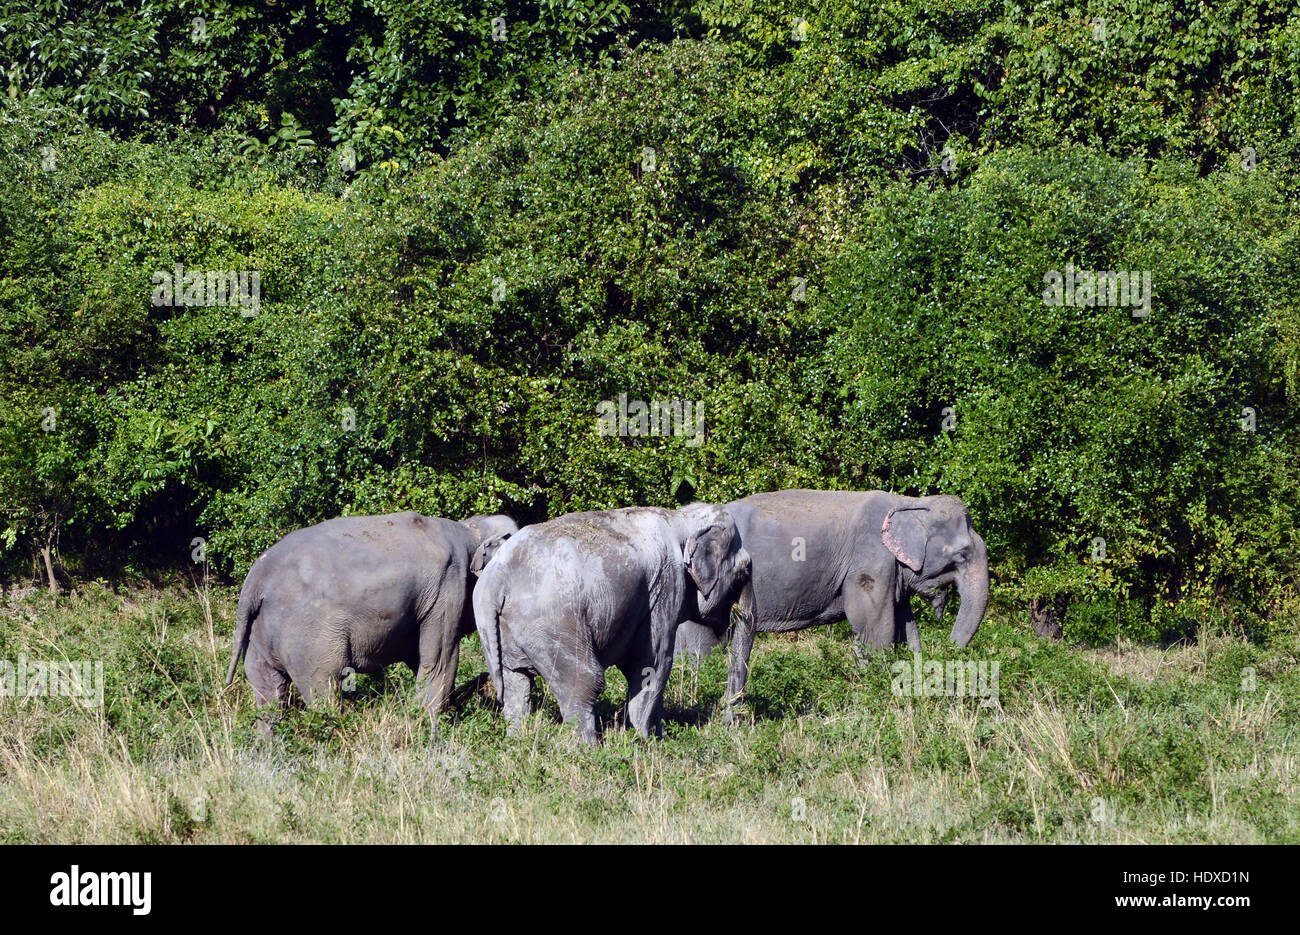 Wild elephants in Kaziranga national park in Assam, India. Stock Photo